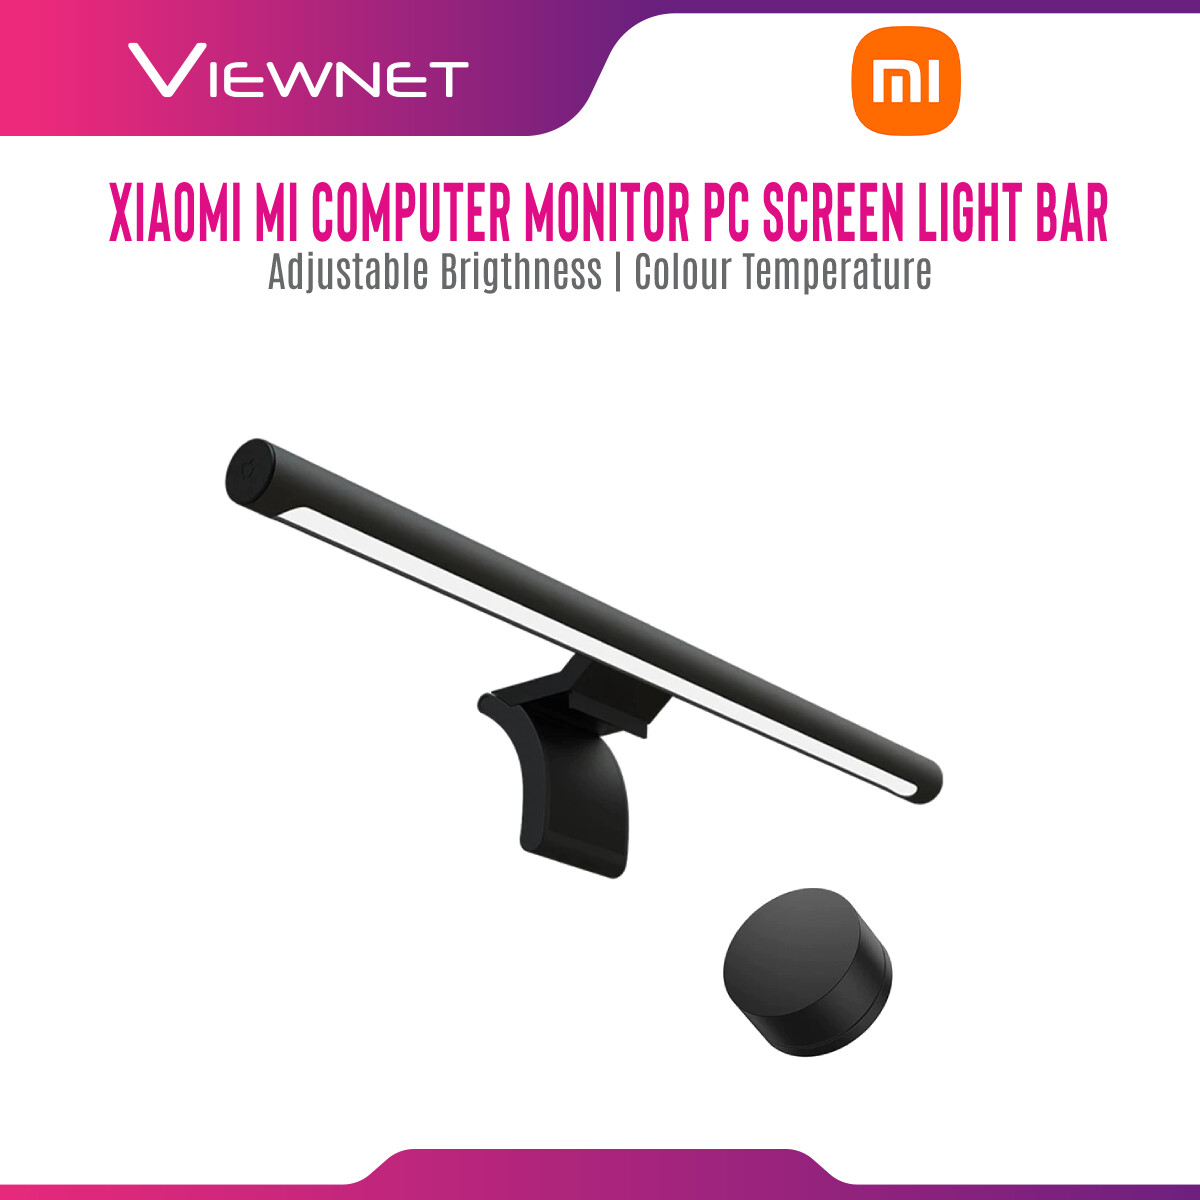 Xiaomi Mi Computer Monitor PC Screen Light Bar - No Screen Reflection,  Adjustable Brightness & Color Temperature